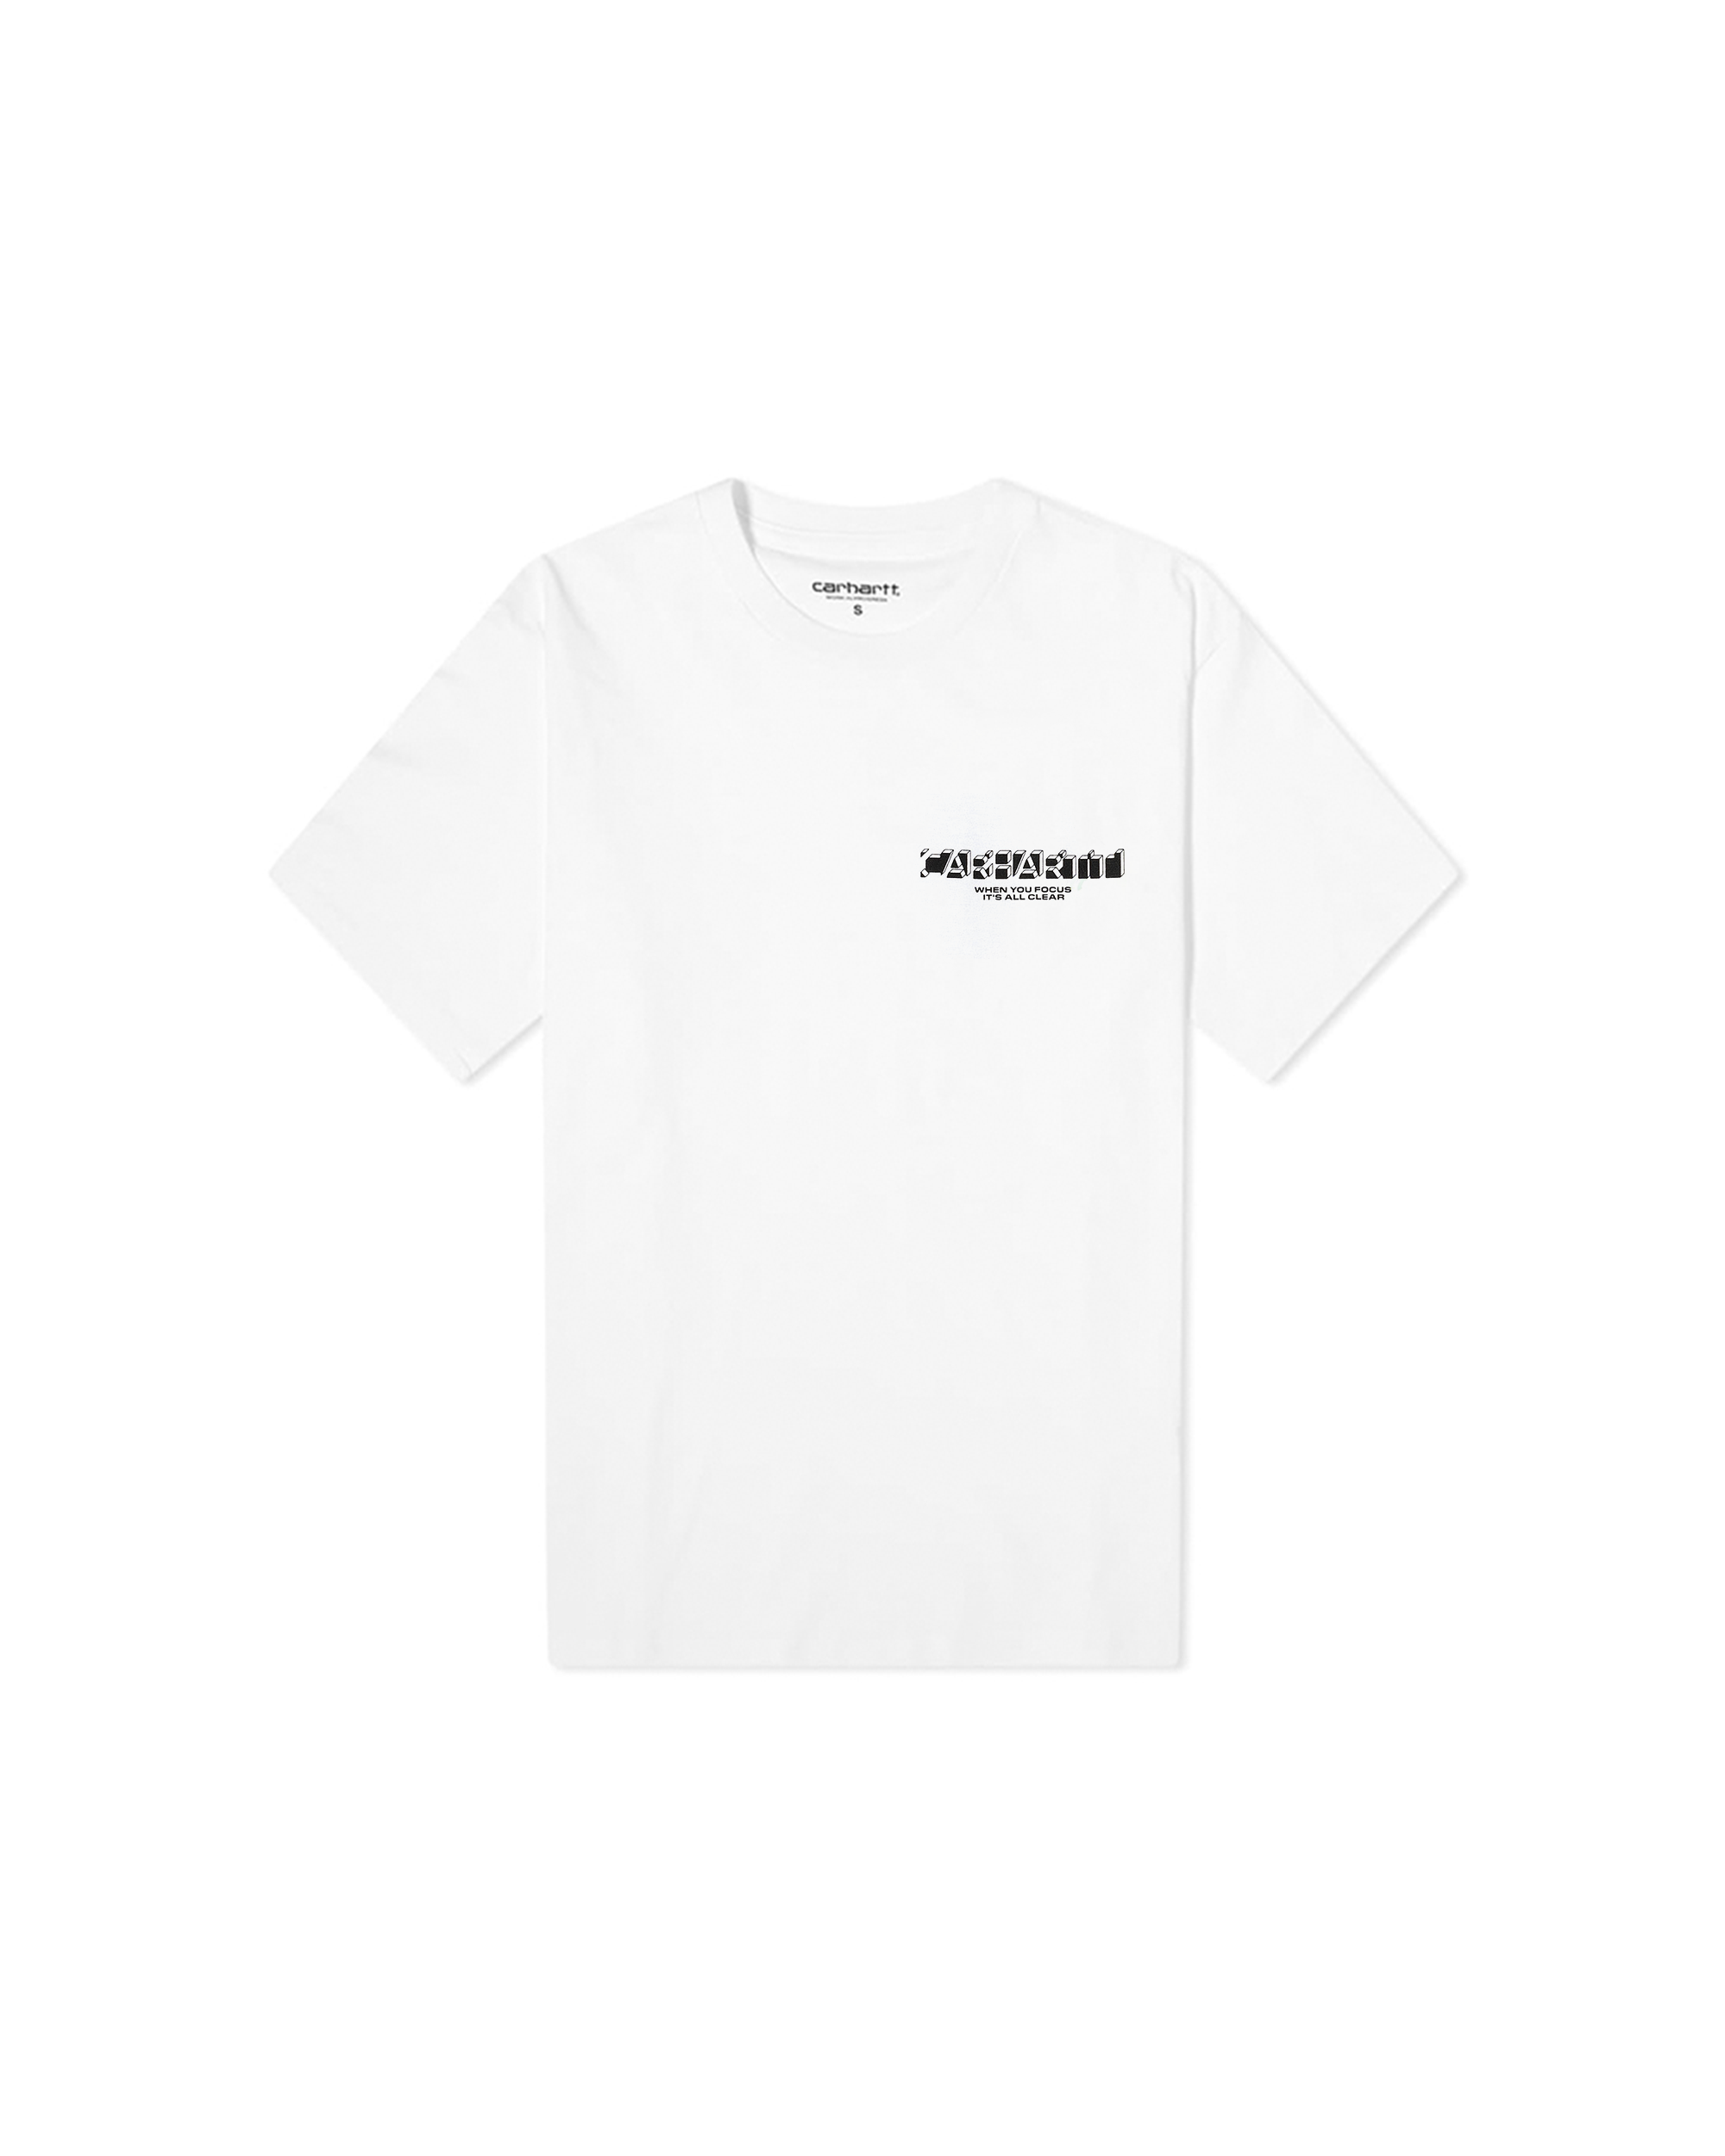 Natural Surveillance T-shirt - White